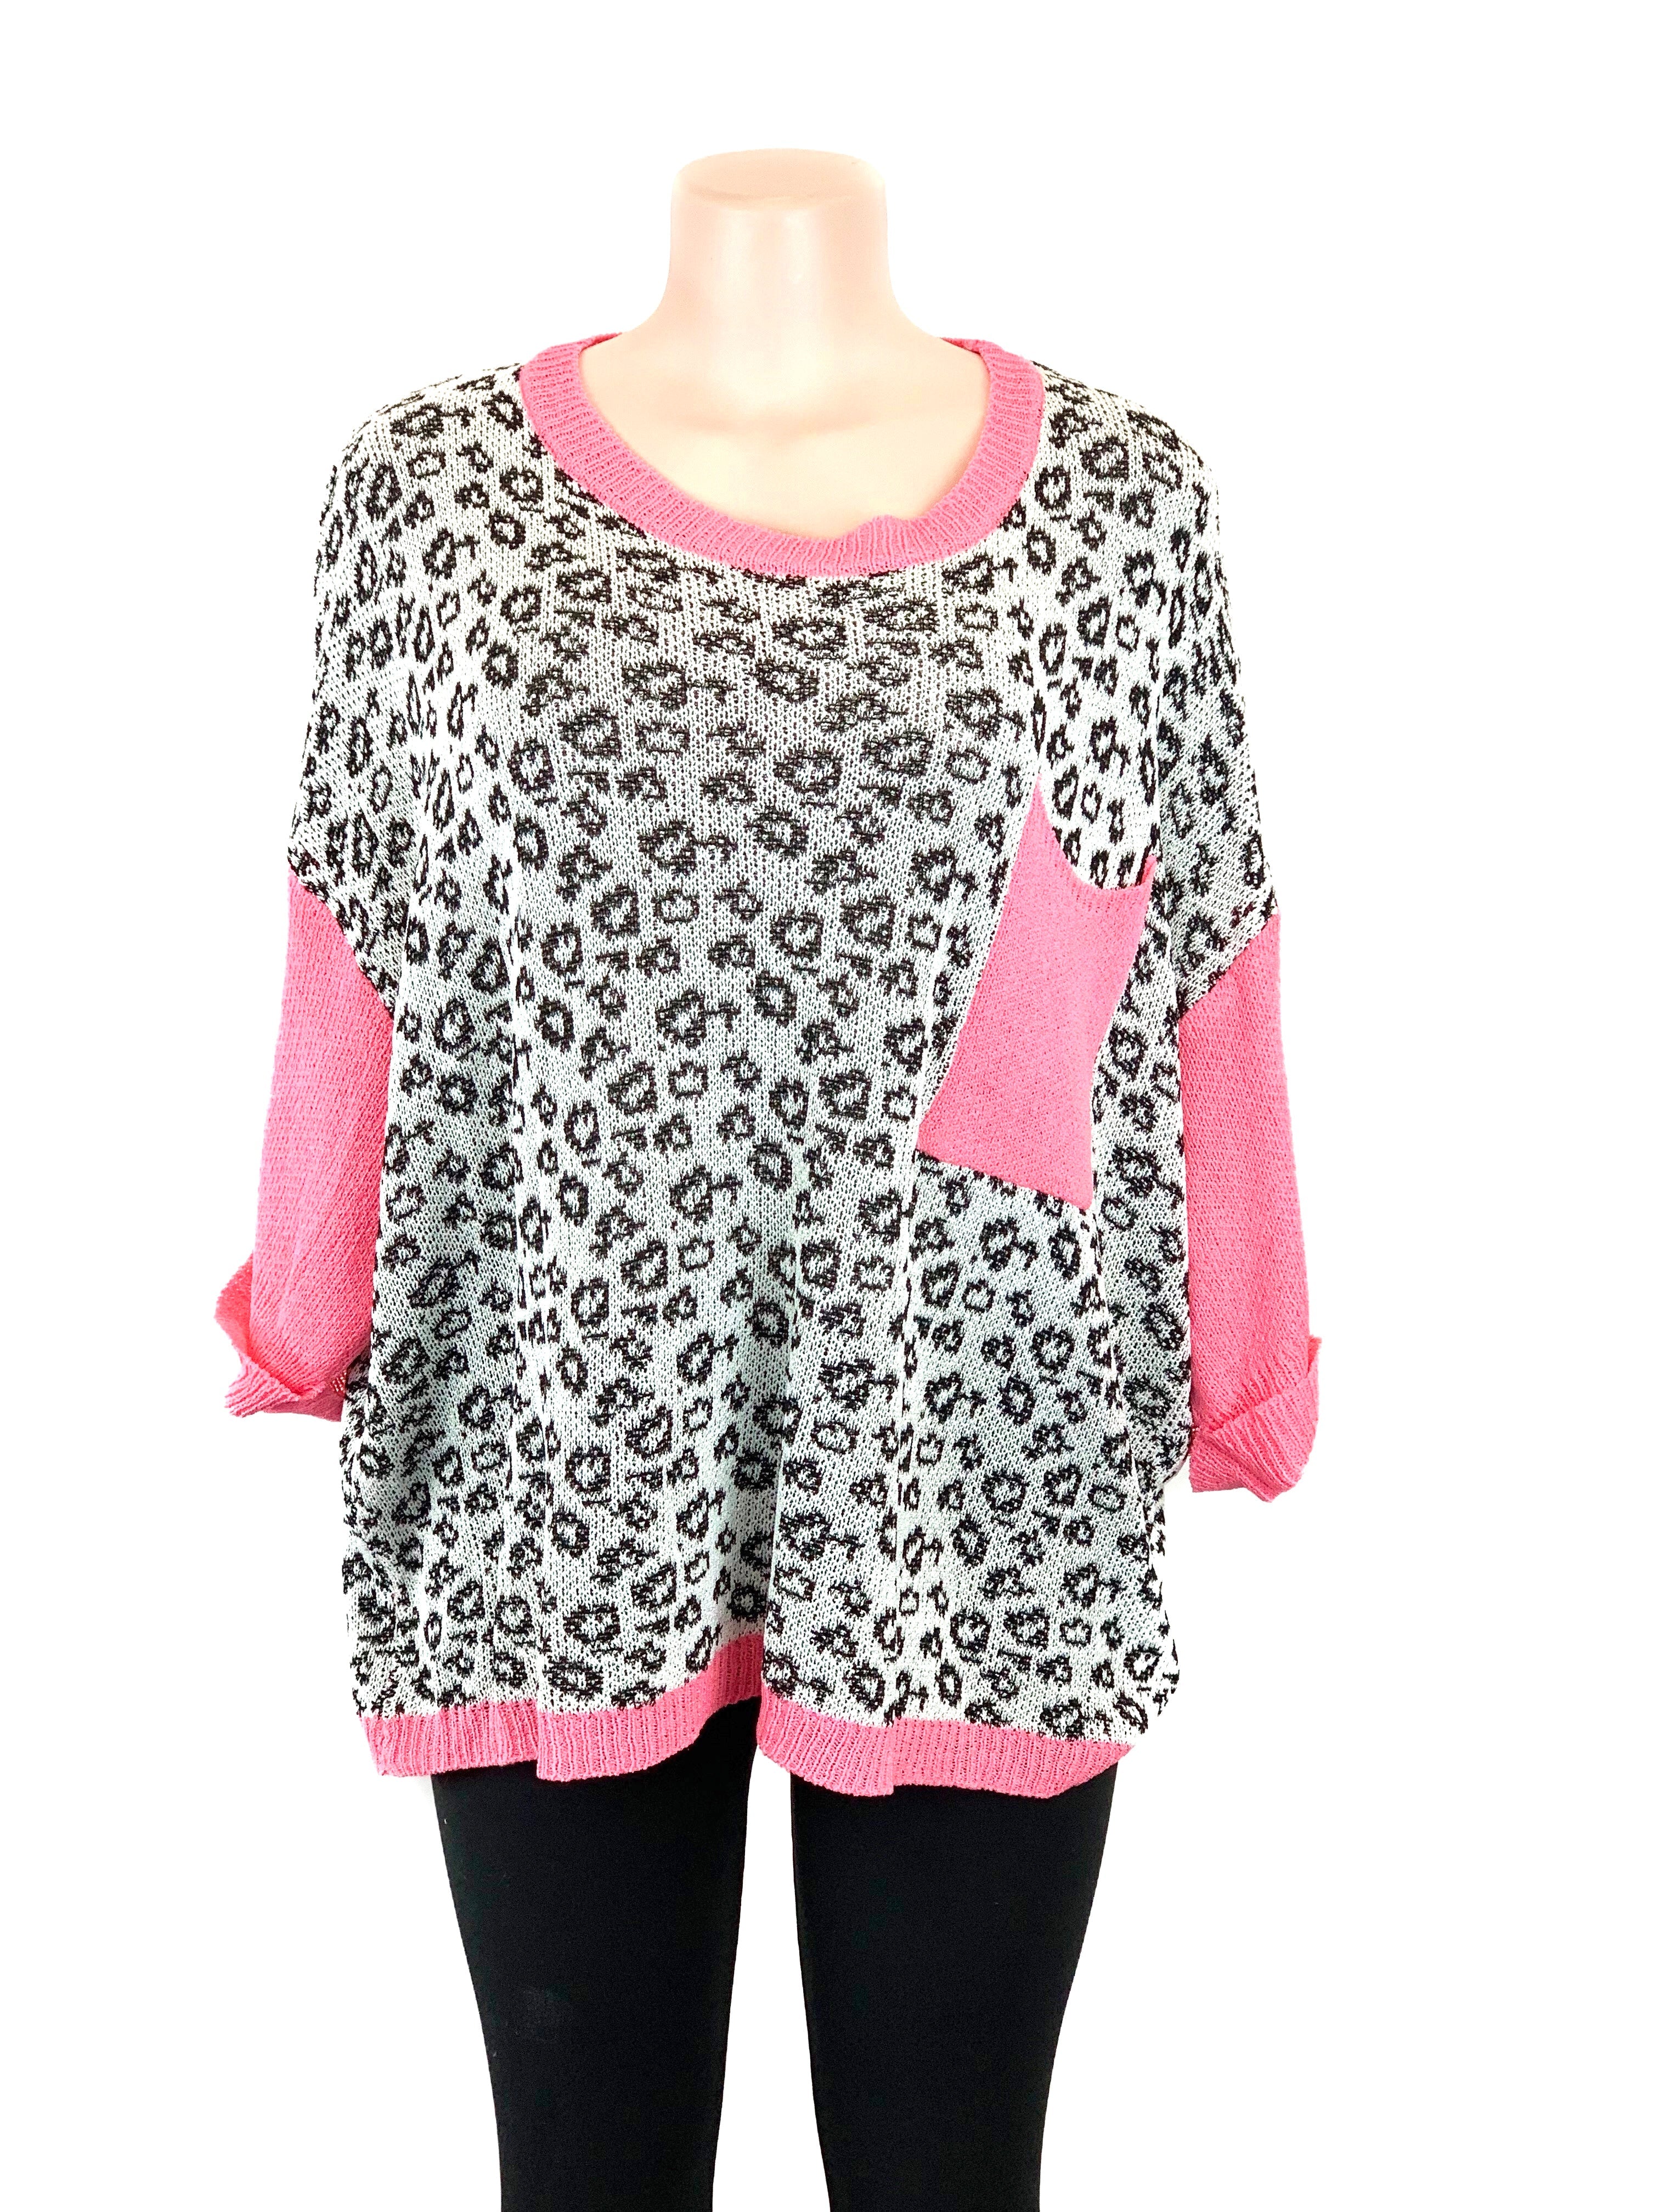 Medium Weight Pink Cheetah Print Gauze Sweater-2